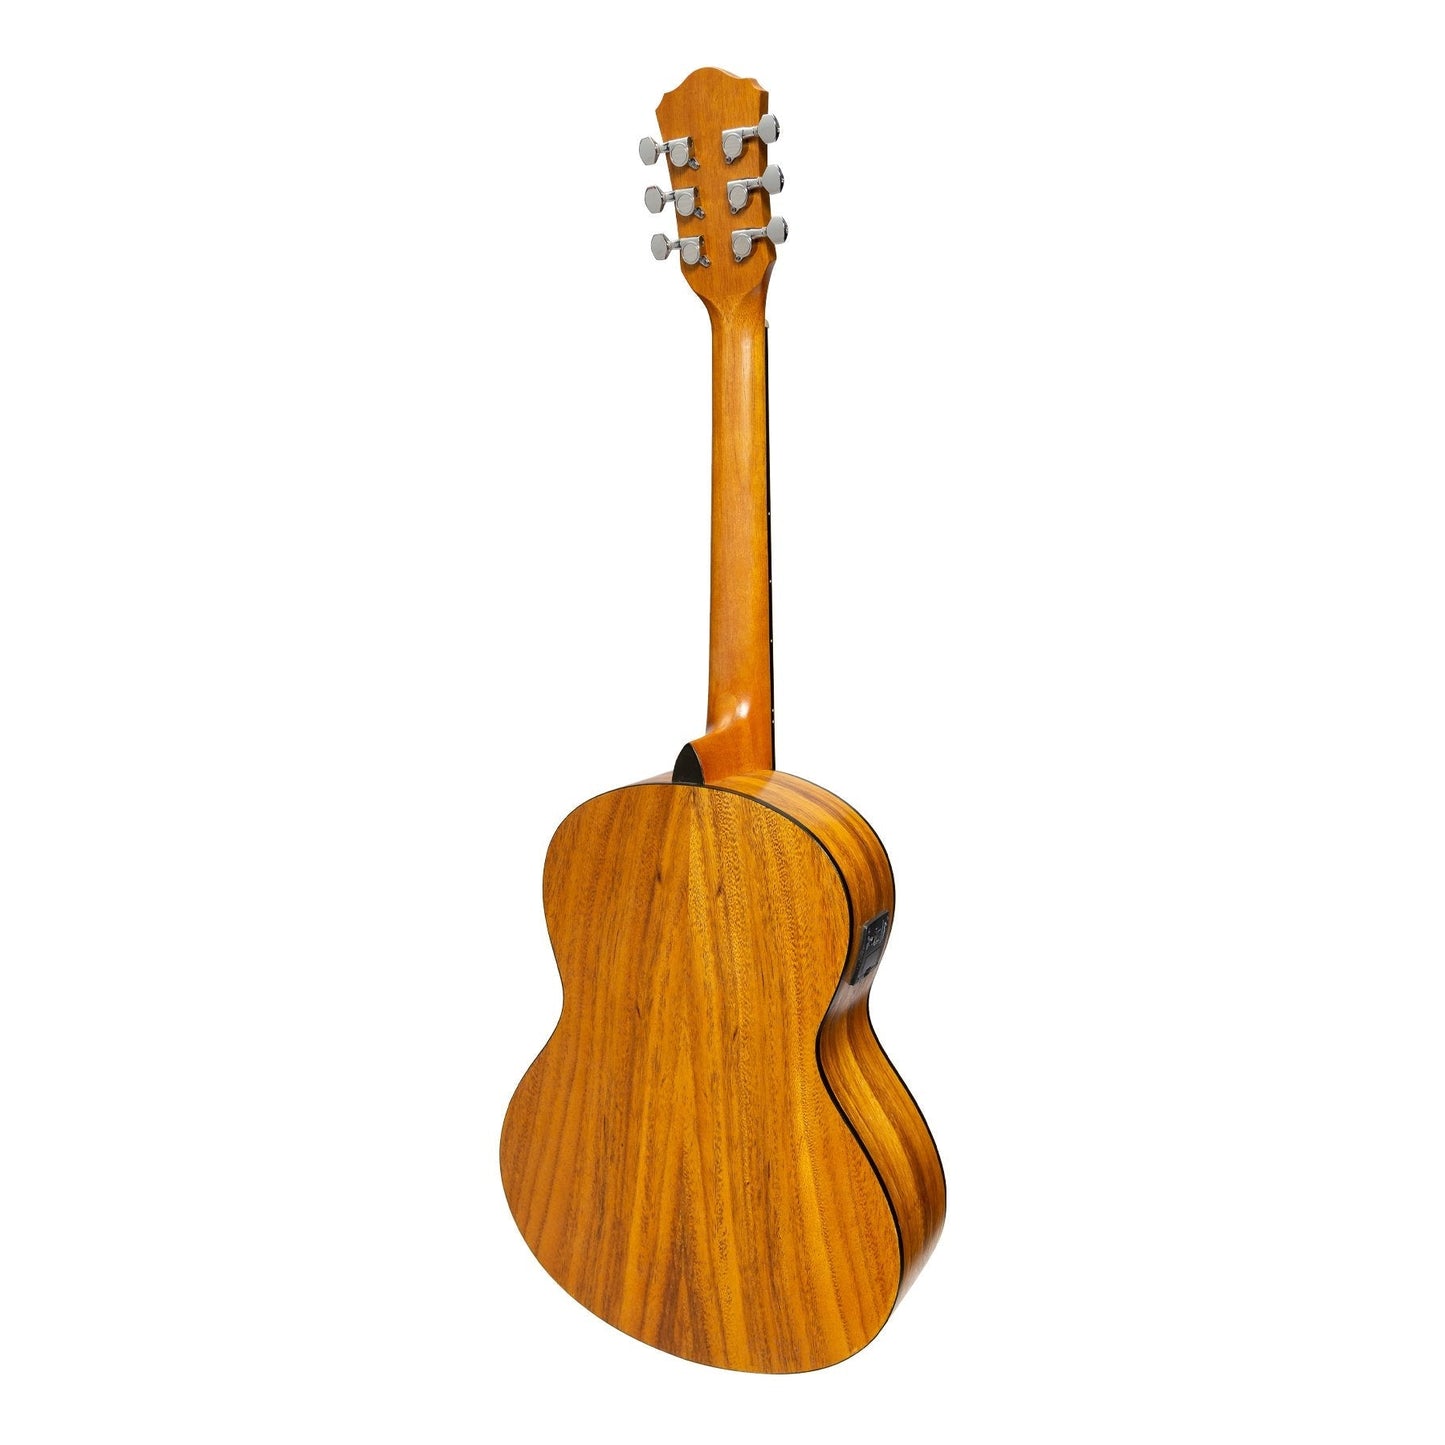 Martinez Acoustic 'Little-Mini' Folk Guitar with Built-In Tuner (Koa)